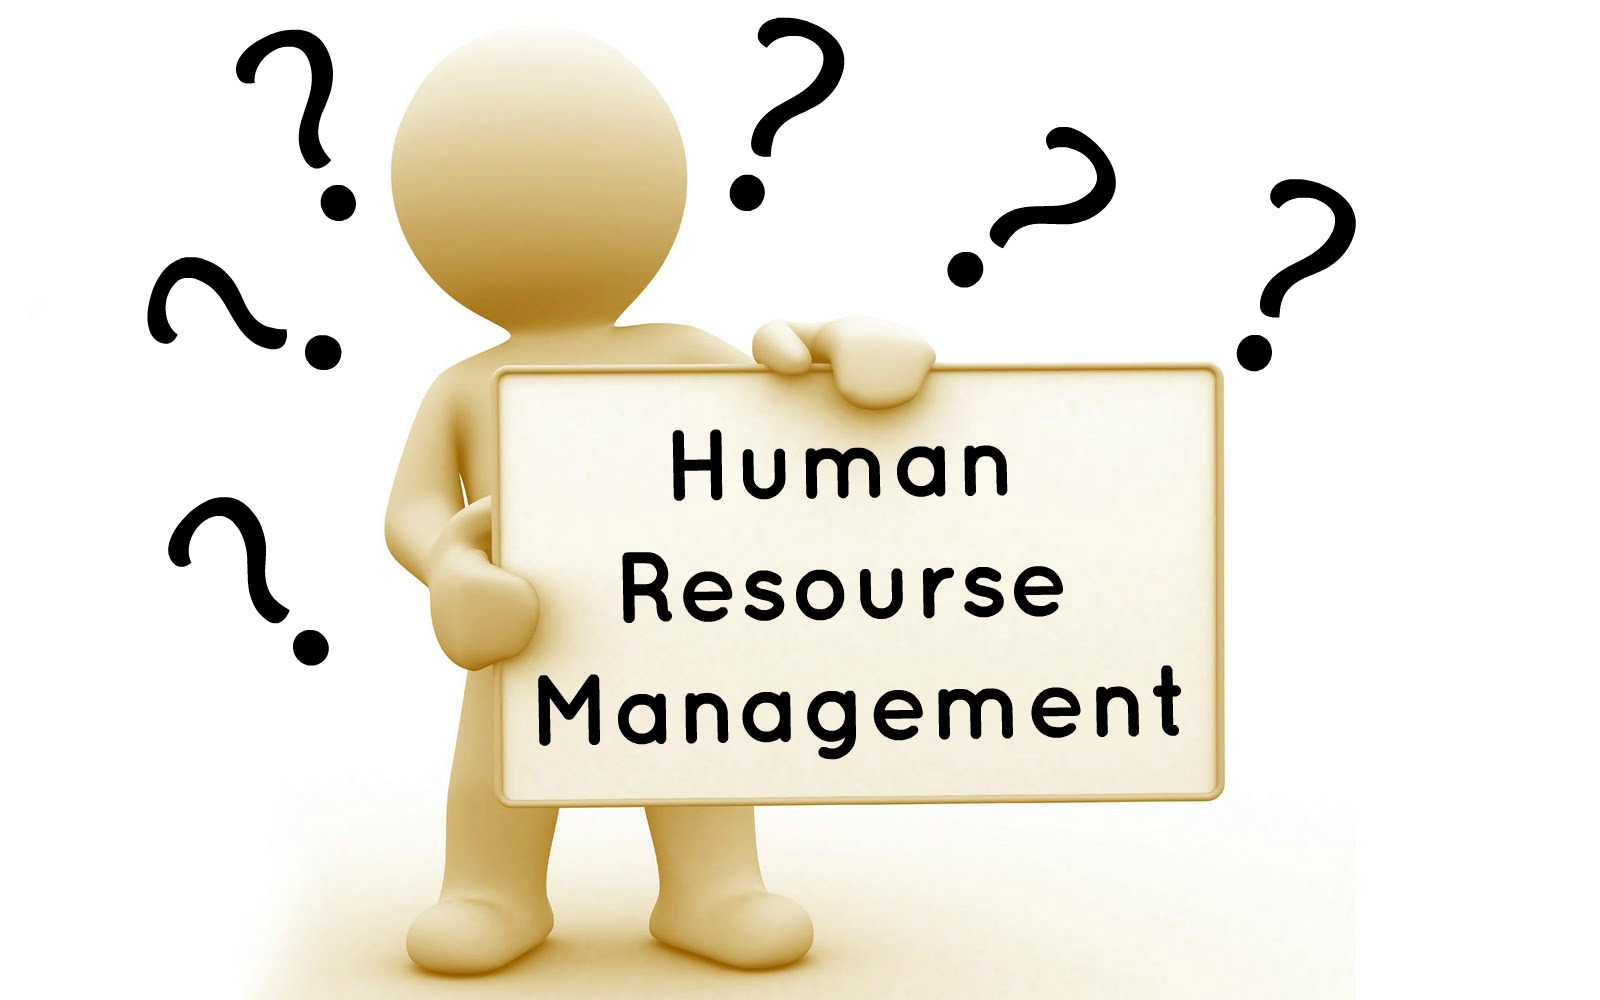 http://study.aisectonline.com/images/Human Resourse Management.jpg